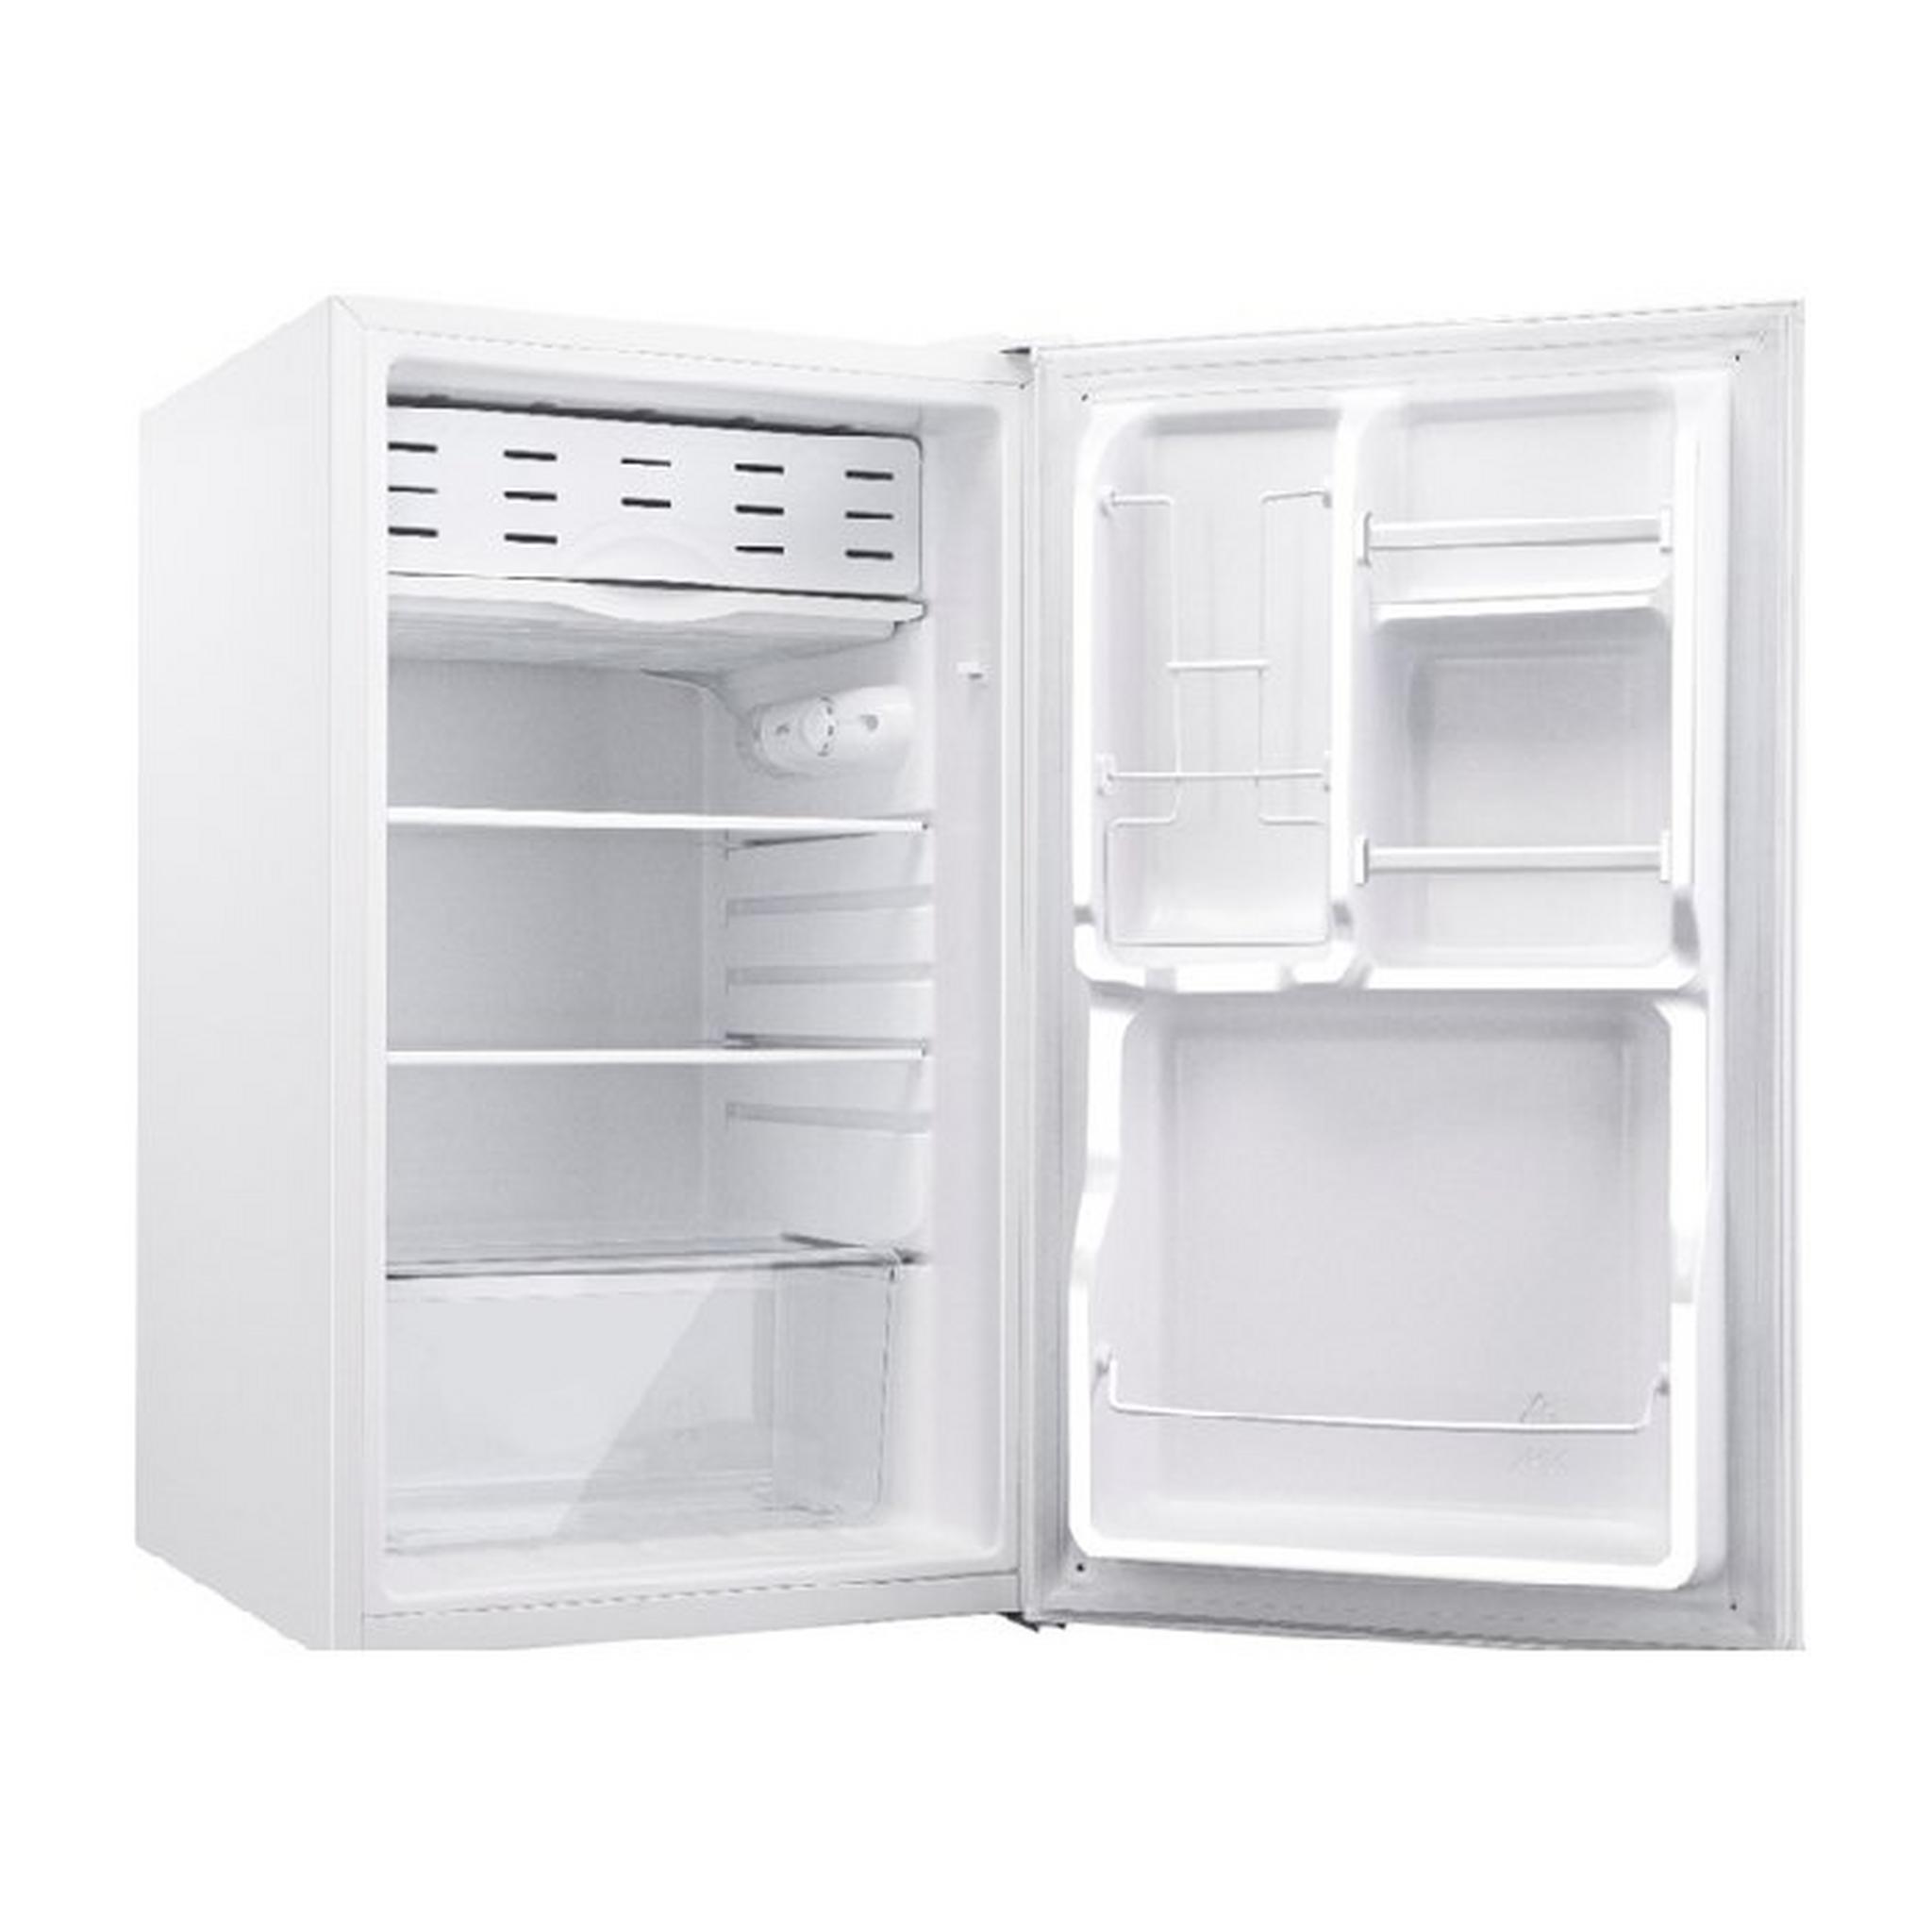 WANSA Single Door Mini Refrigerator, 5.3CFT, 150 Liters, WROG150NFWTC72 - White